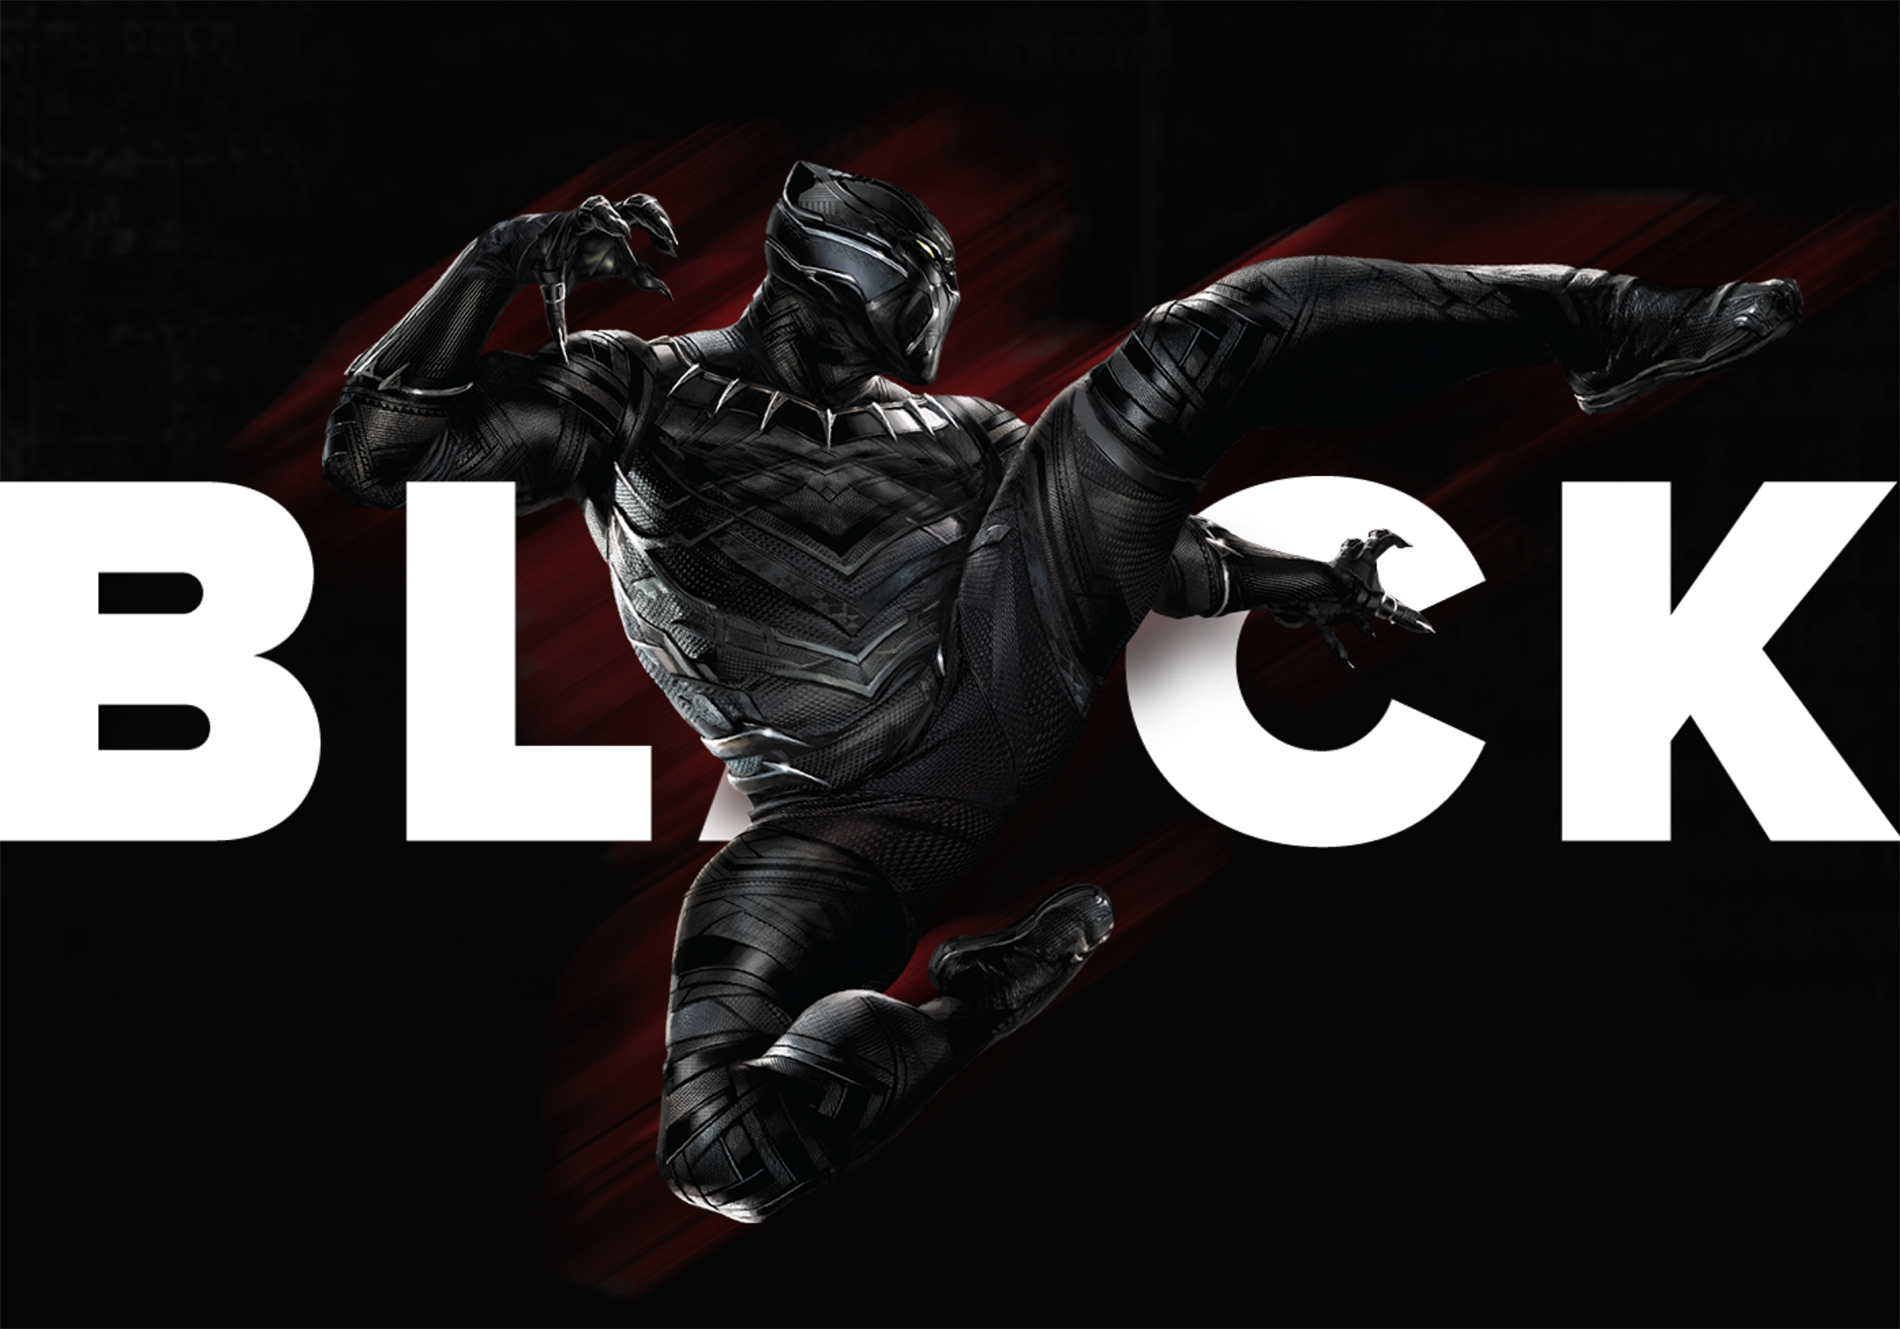 Awesome Web Design for Marvel Black Panther